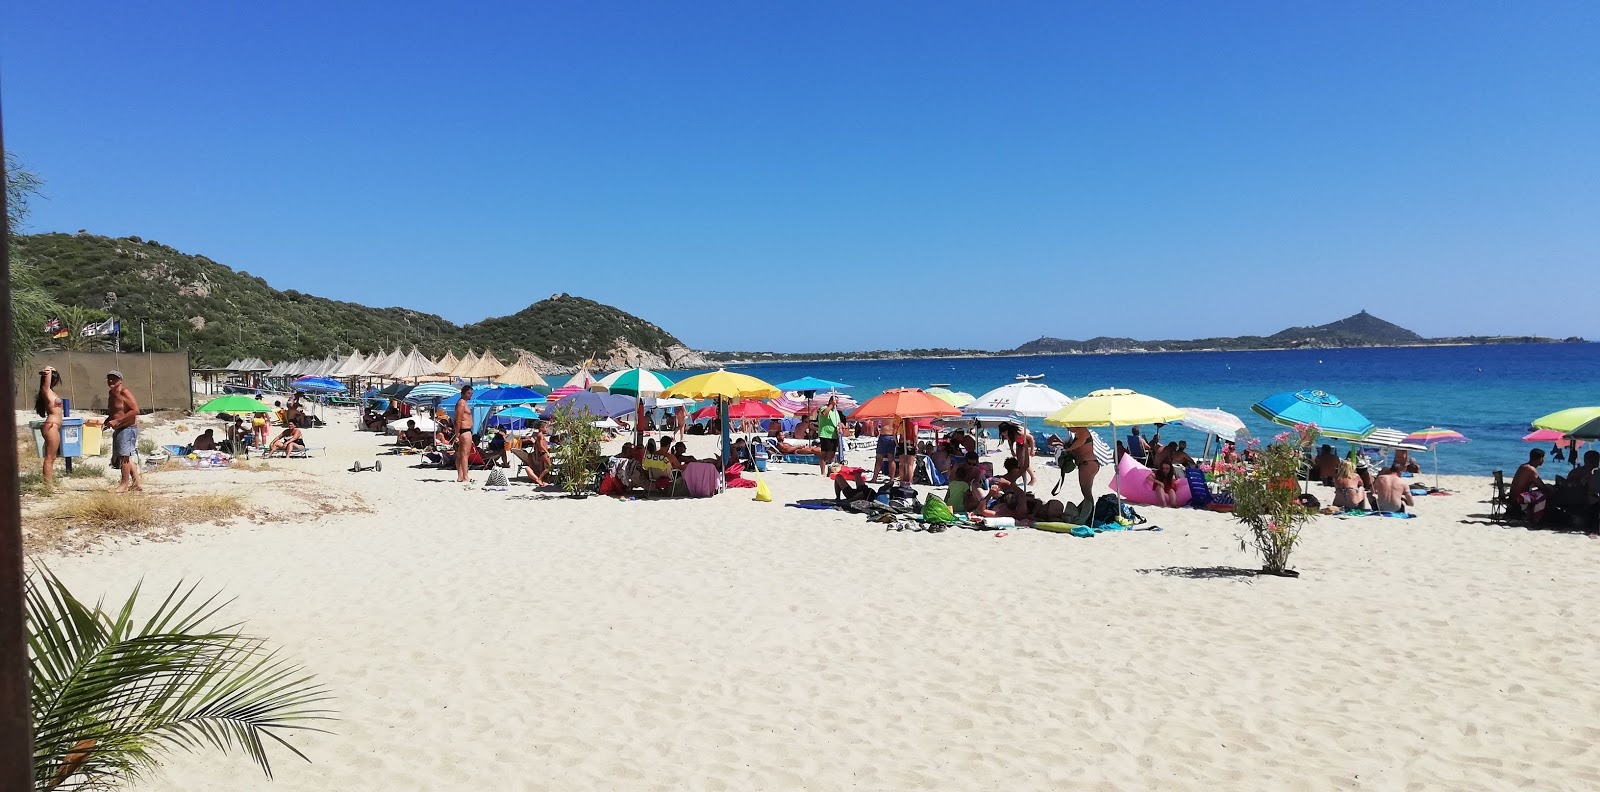 Foto de Praia do Campus - lugar popular entre os apreciadores de relaxamento